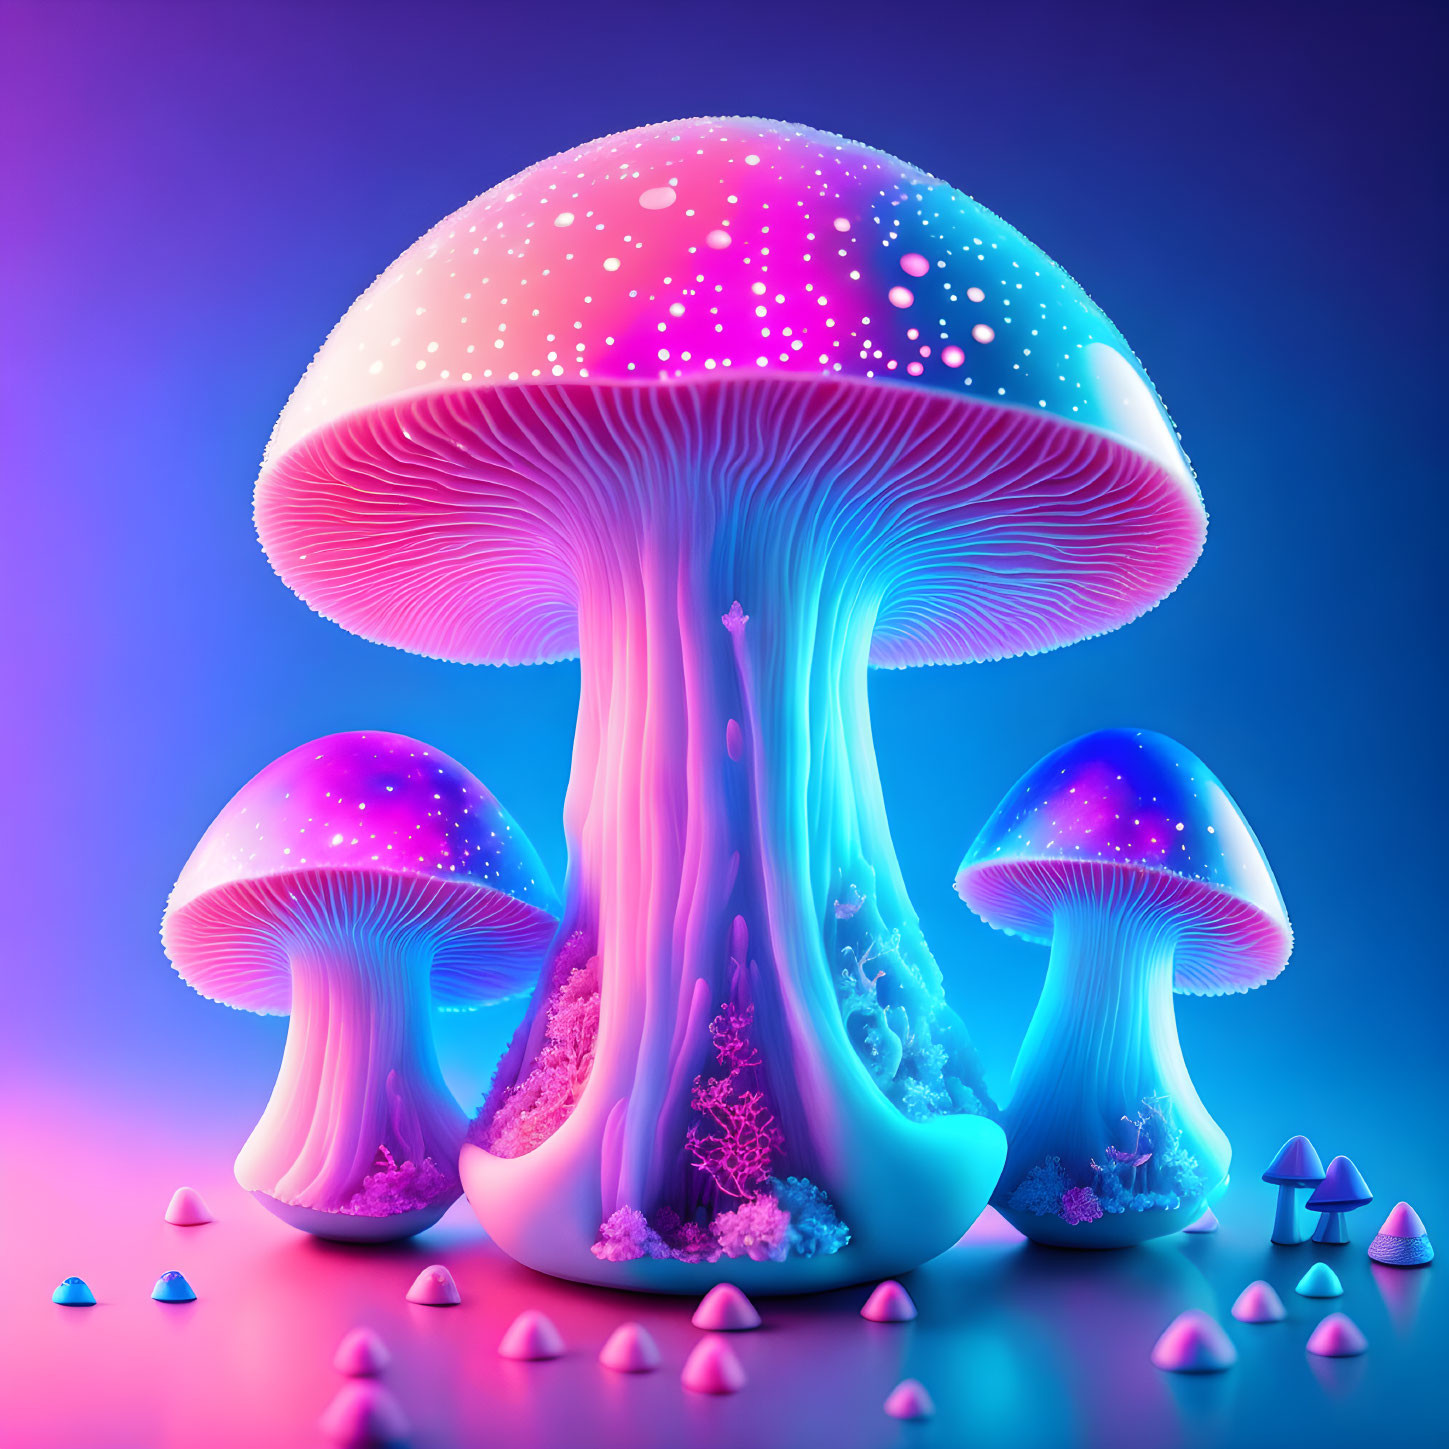 fantastic mushrooms